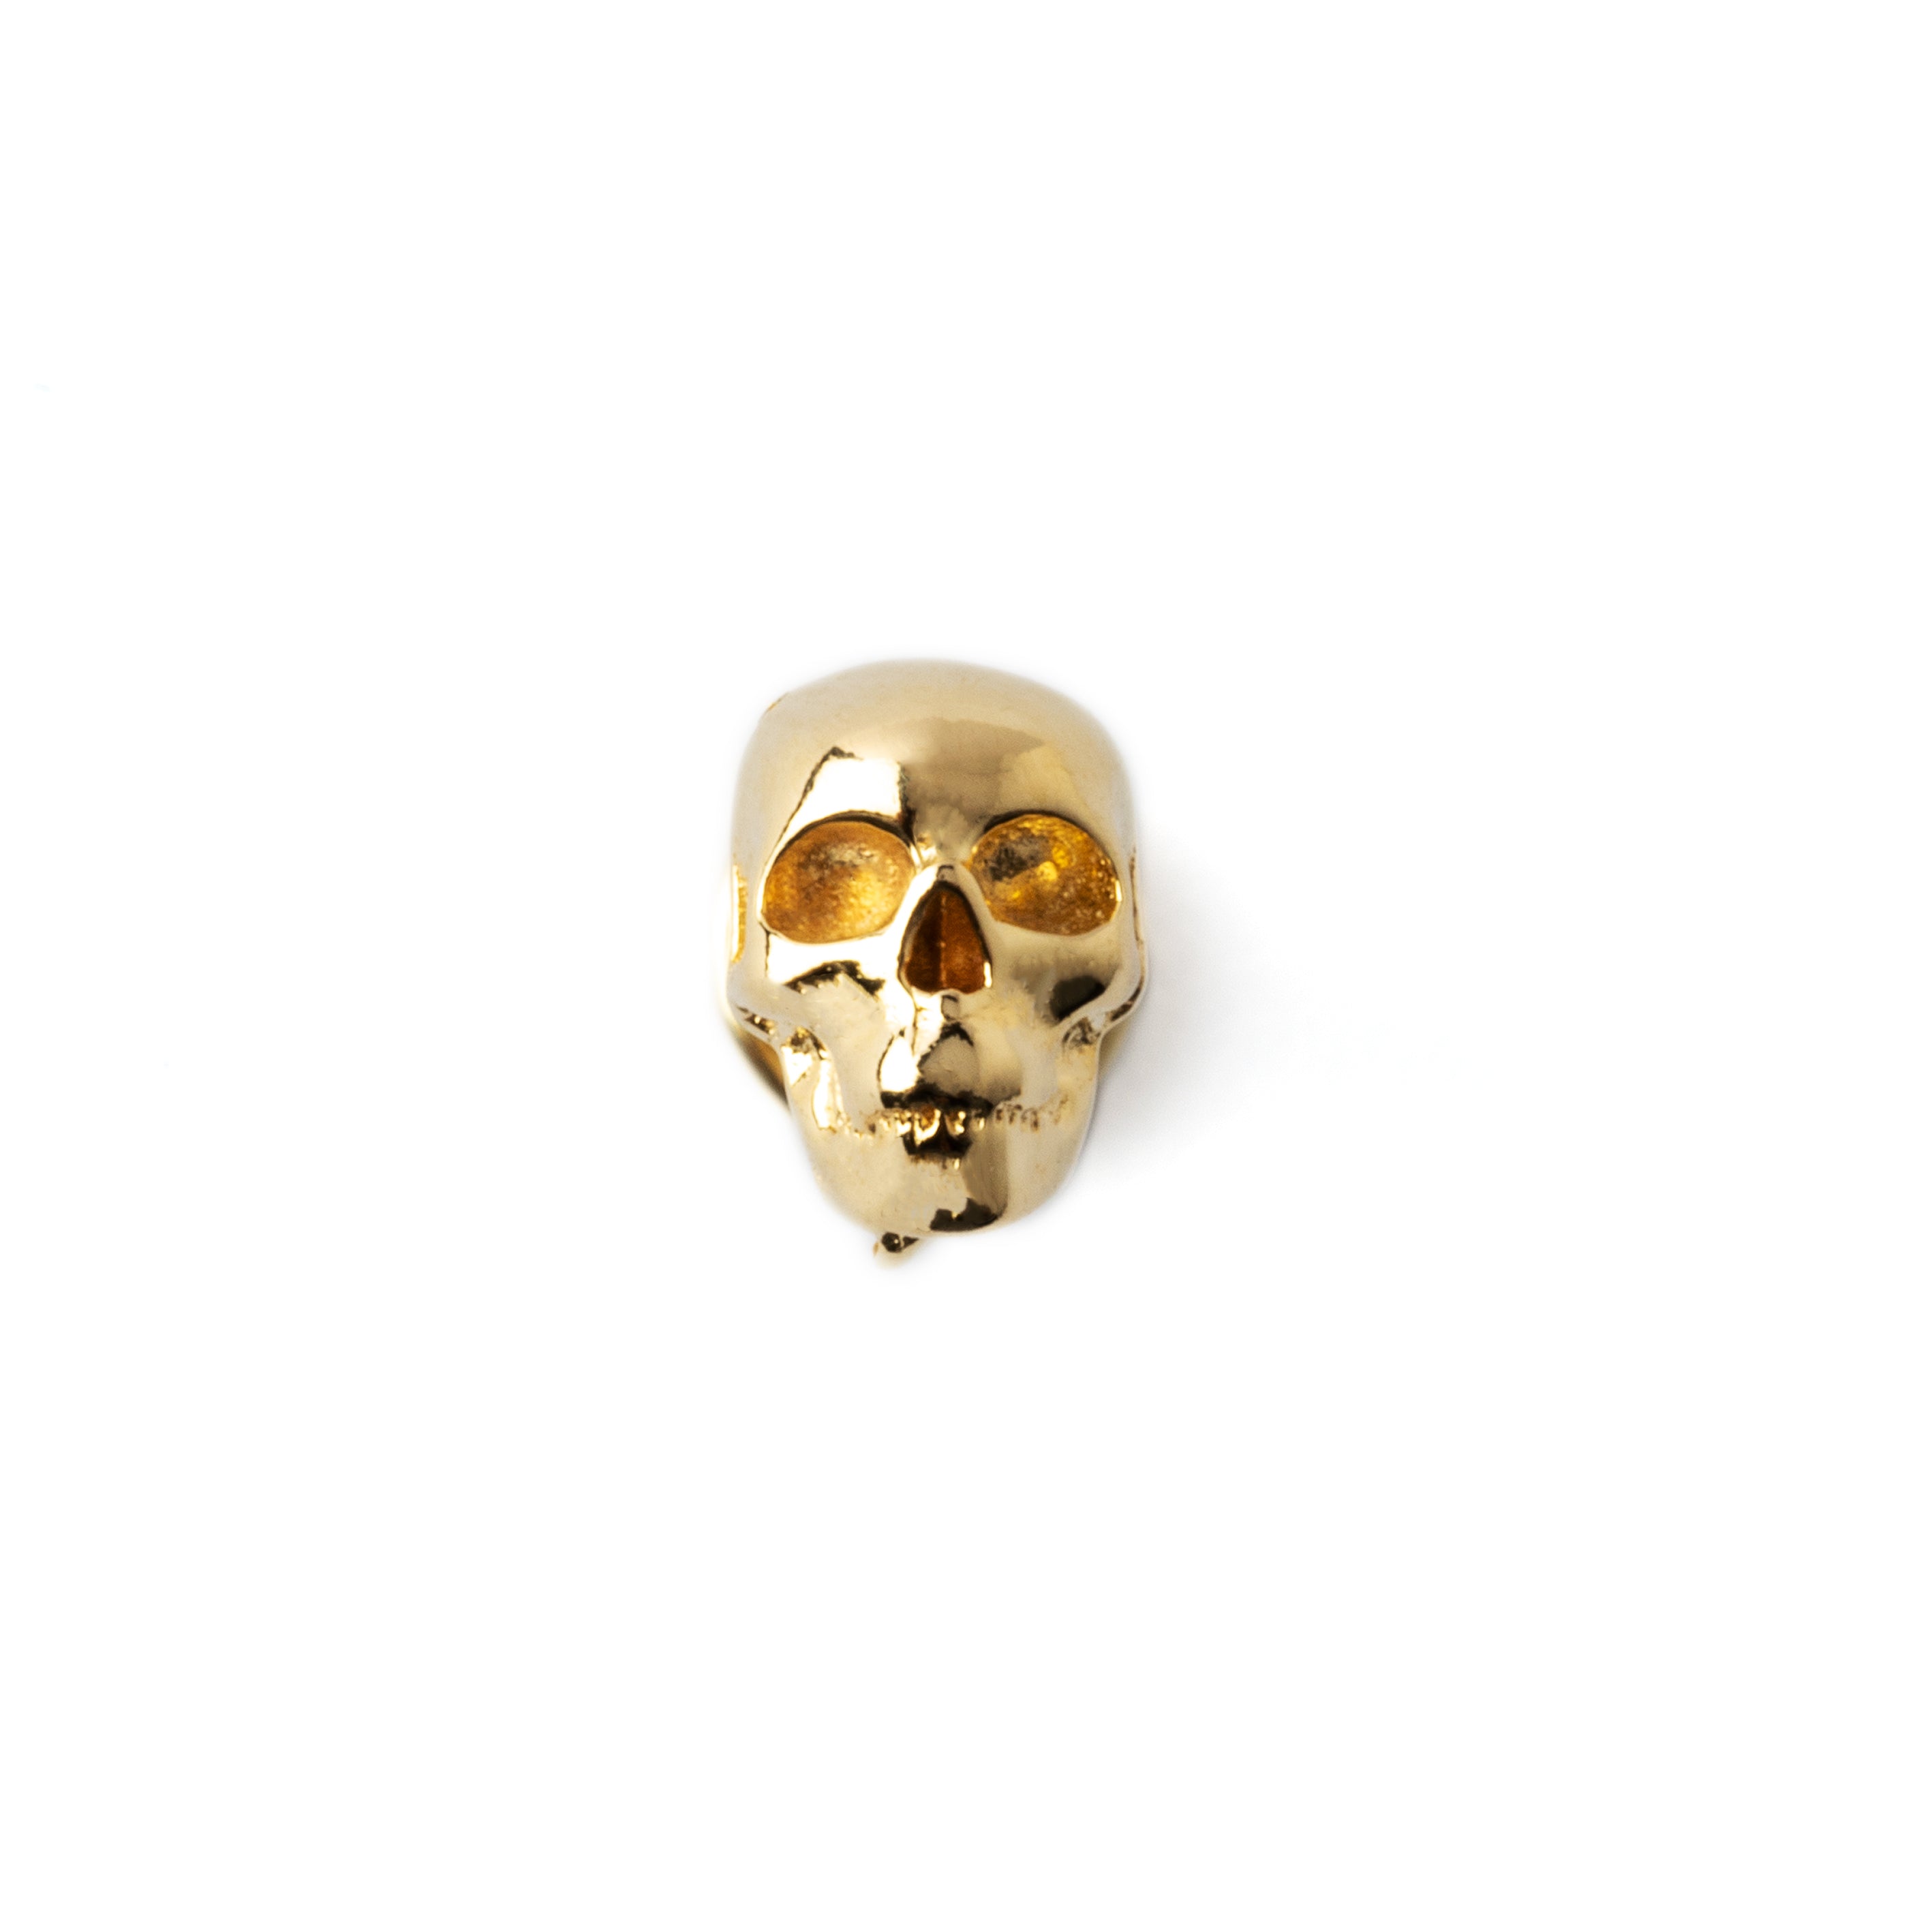 14k Gold skull labret frontal view